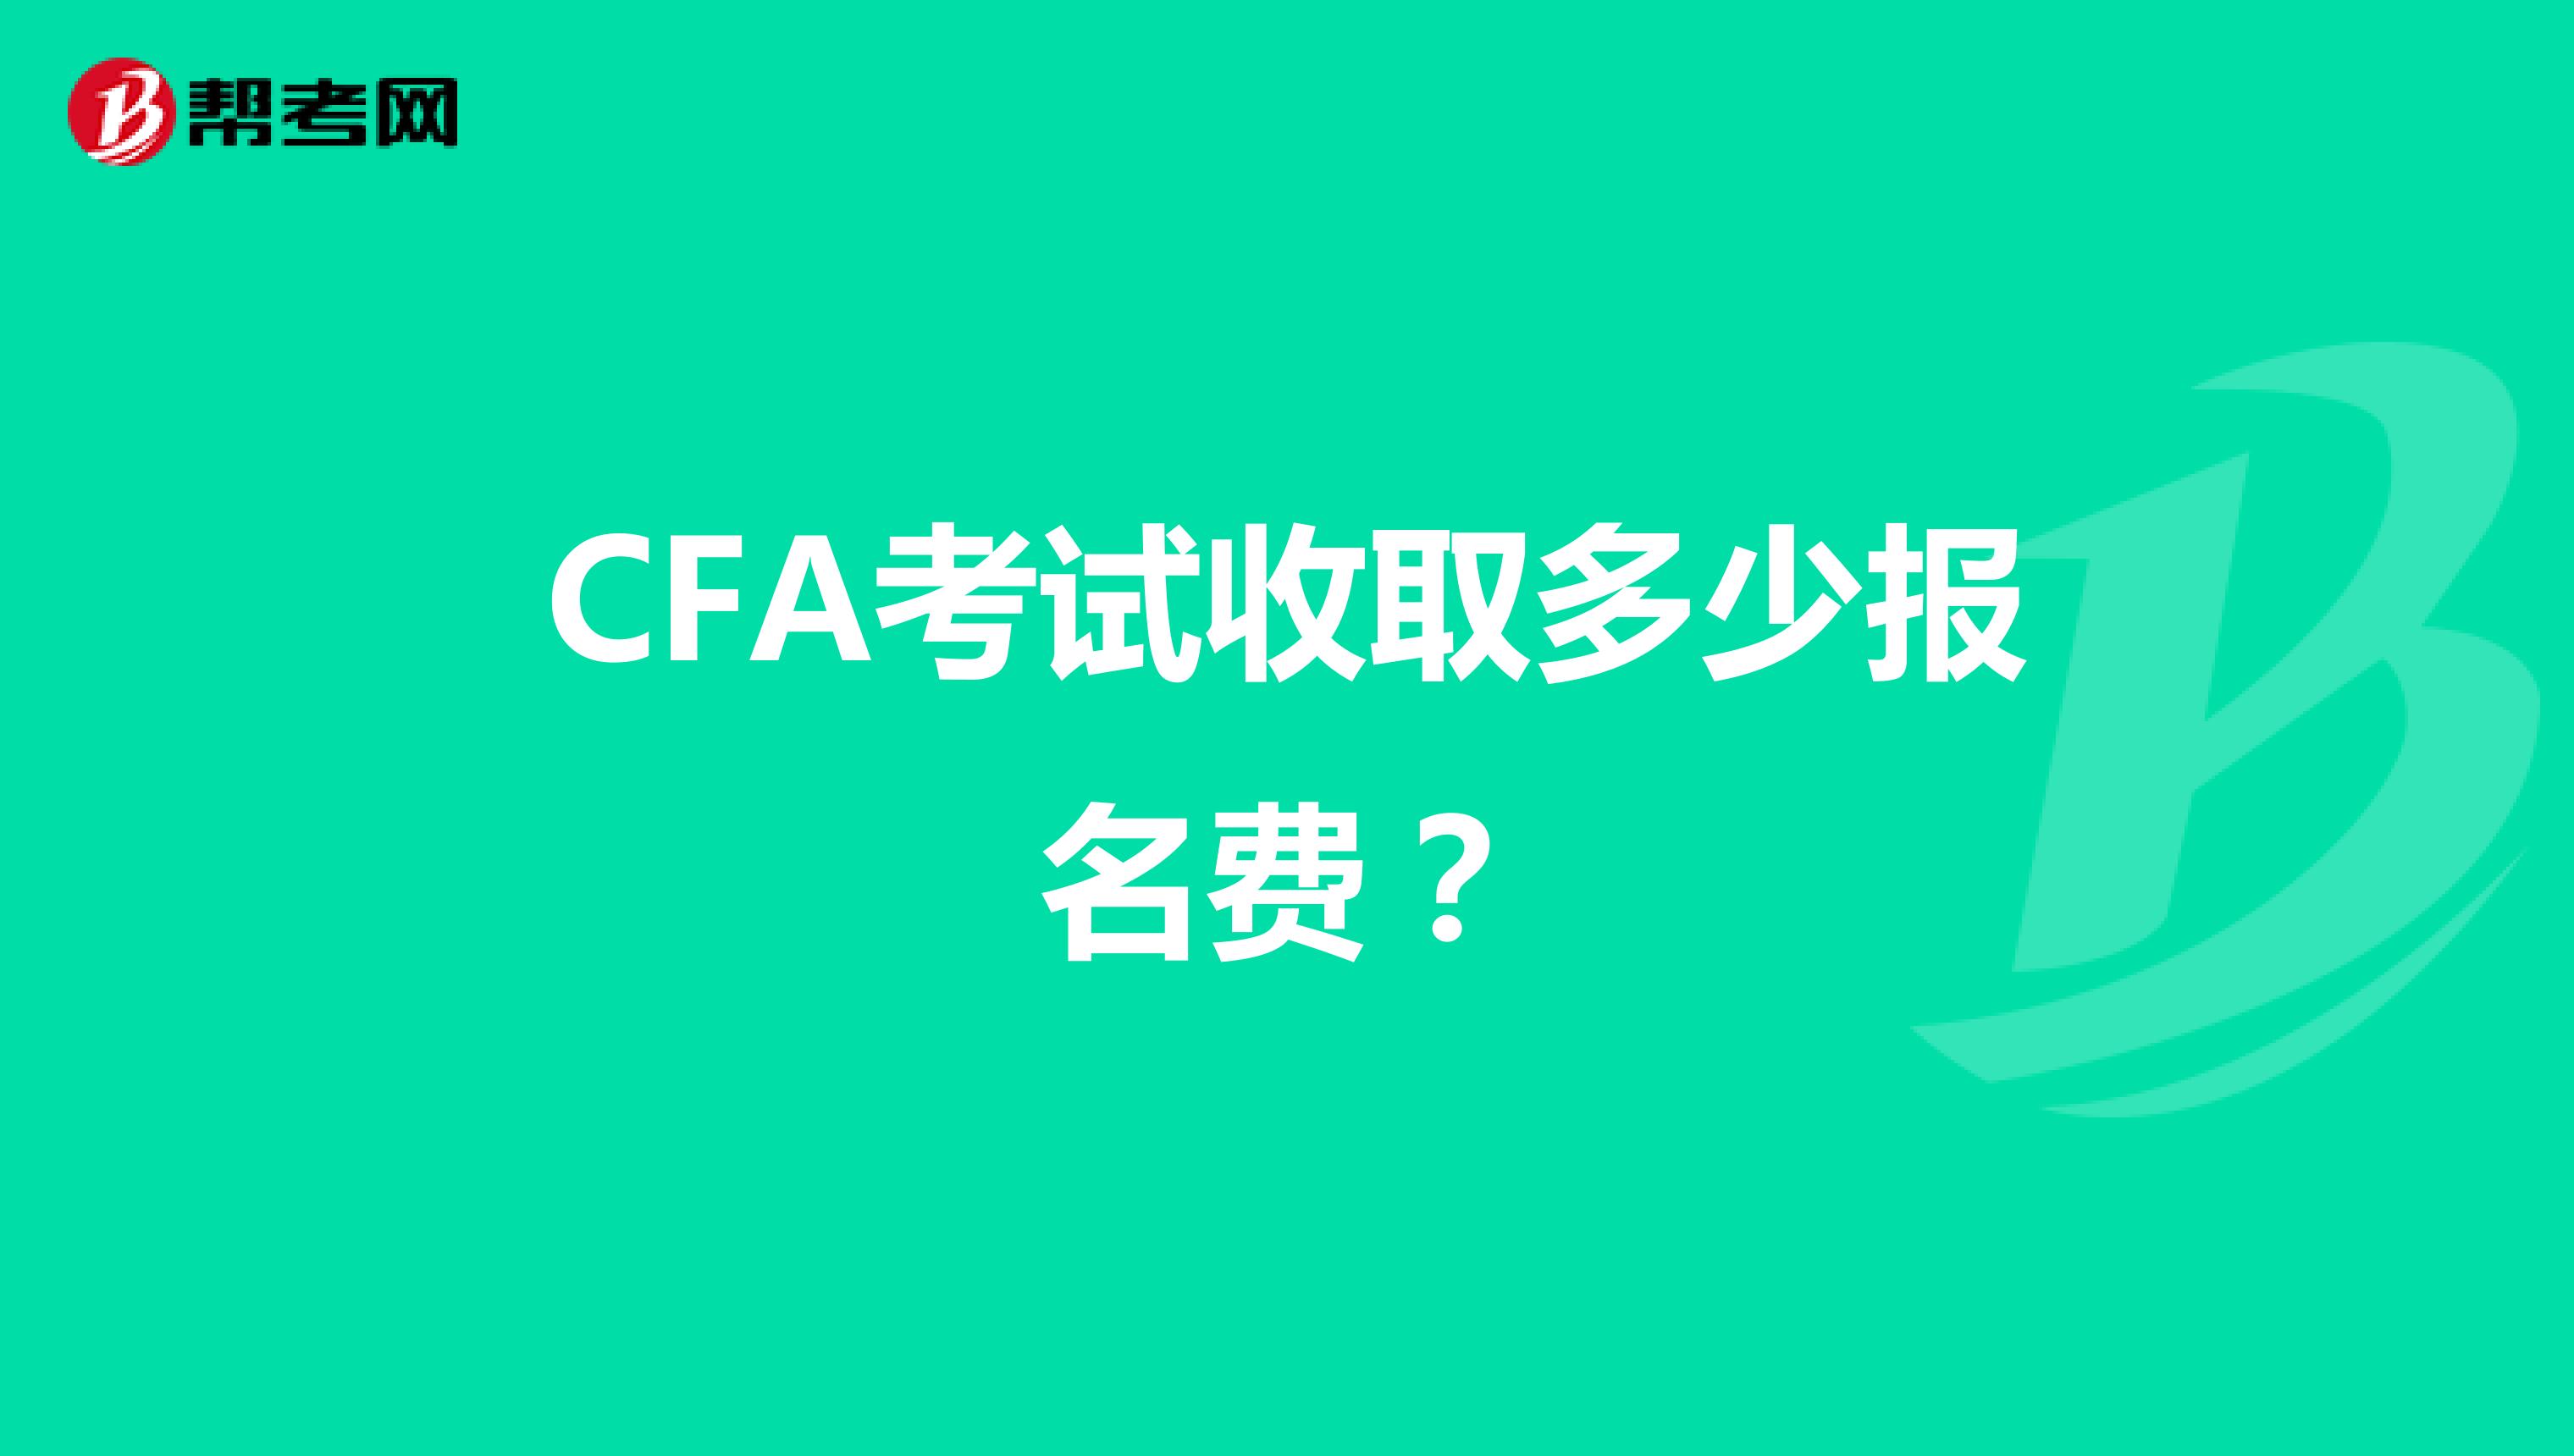 CFA考试收取多少报名费？